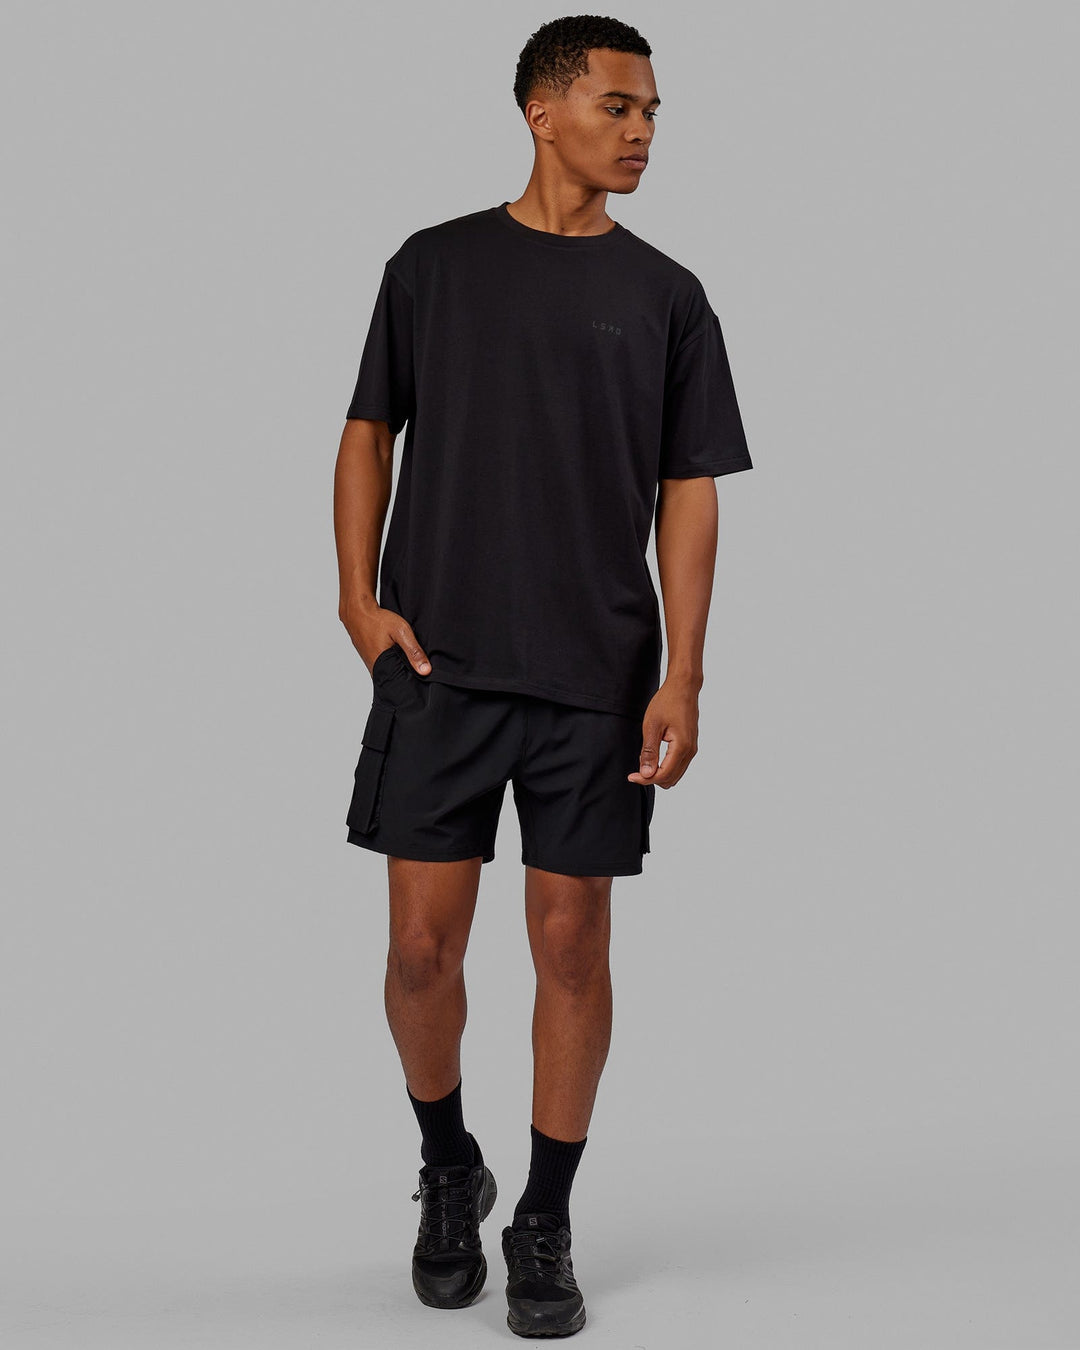 Man wearing Unisex VS5 FLXCotton Tee Oversize - Black-Black